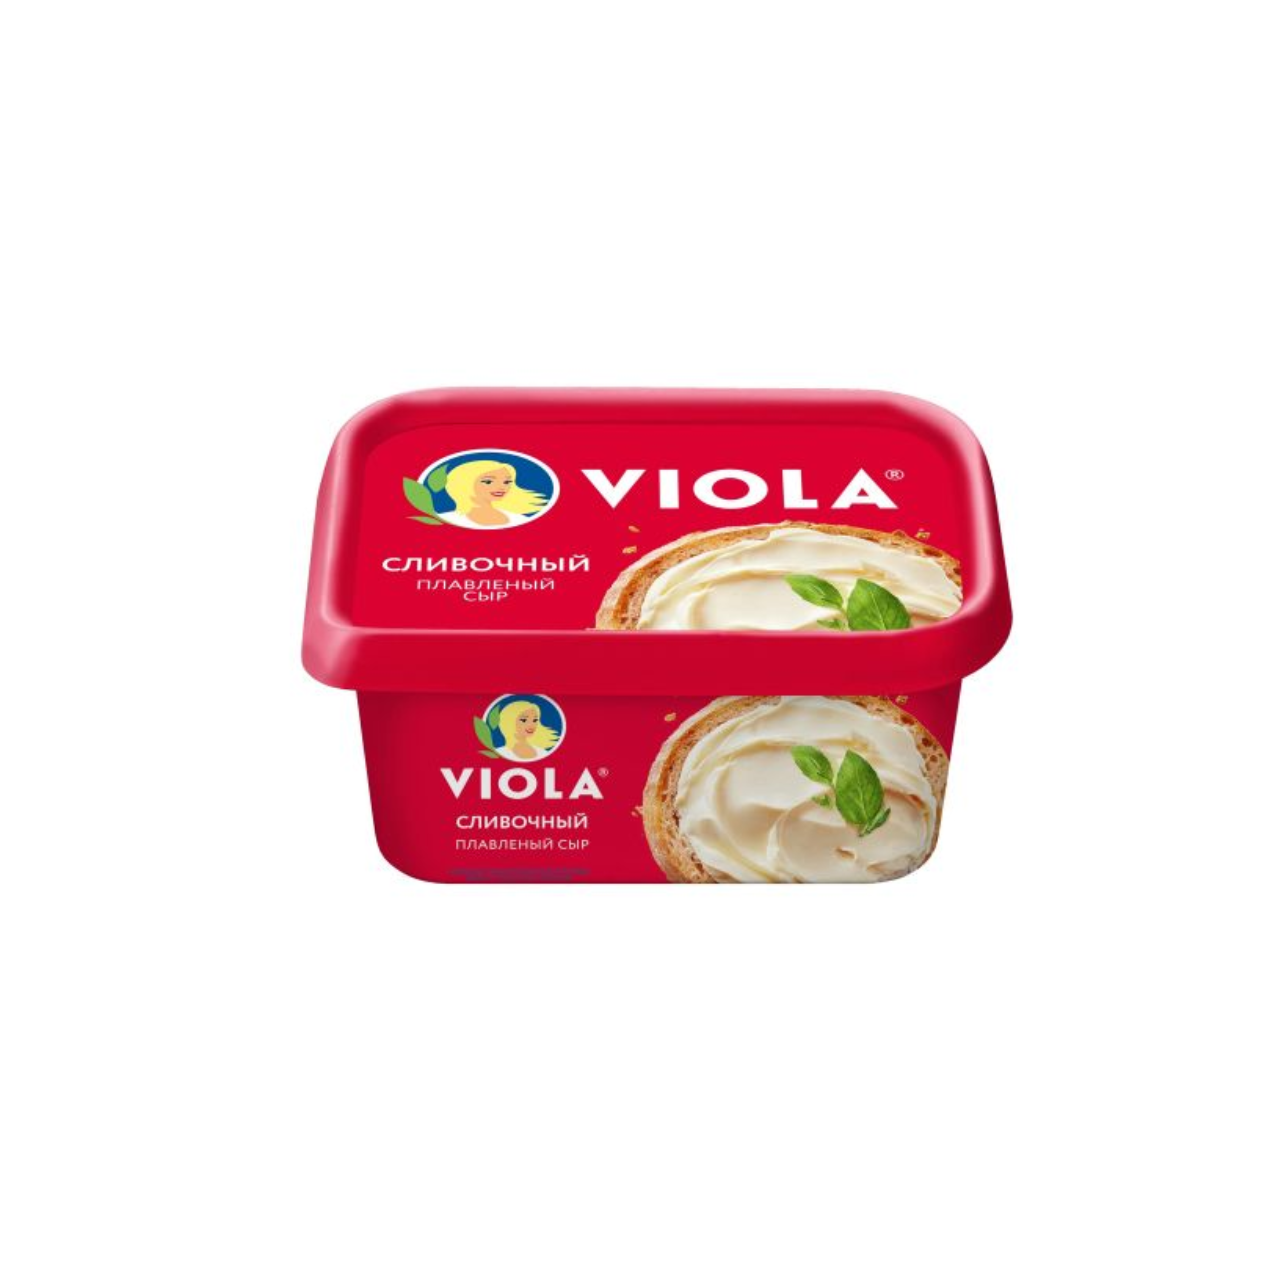 Сыр Виола Валио плав 50% 400 г сливочный